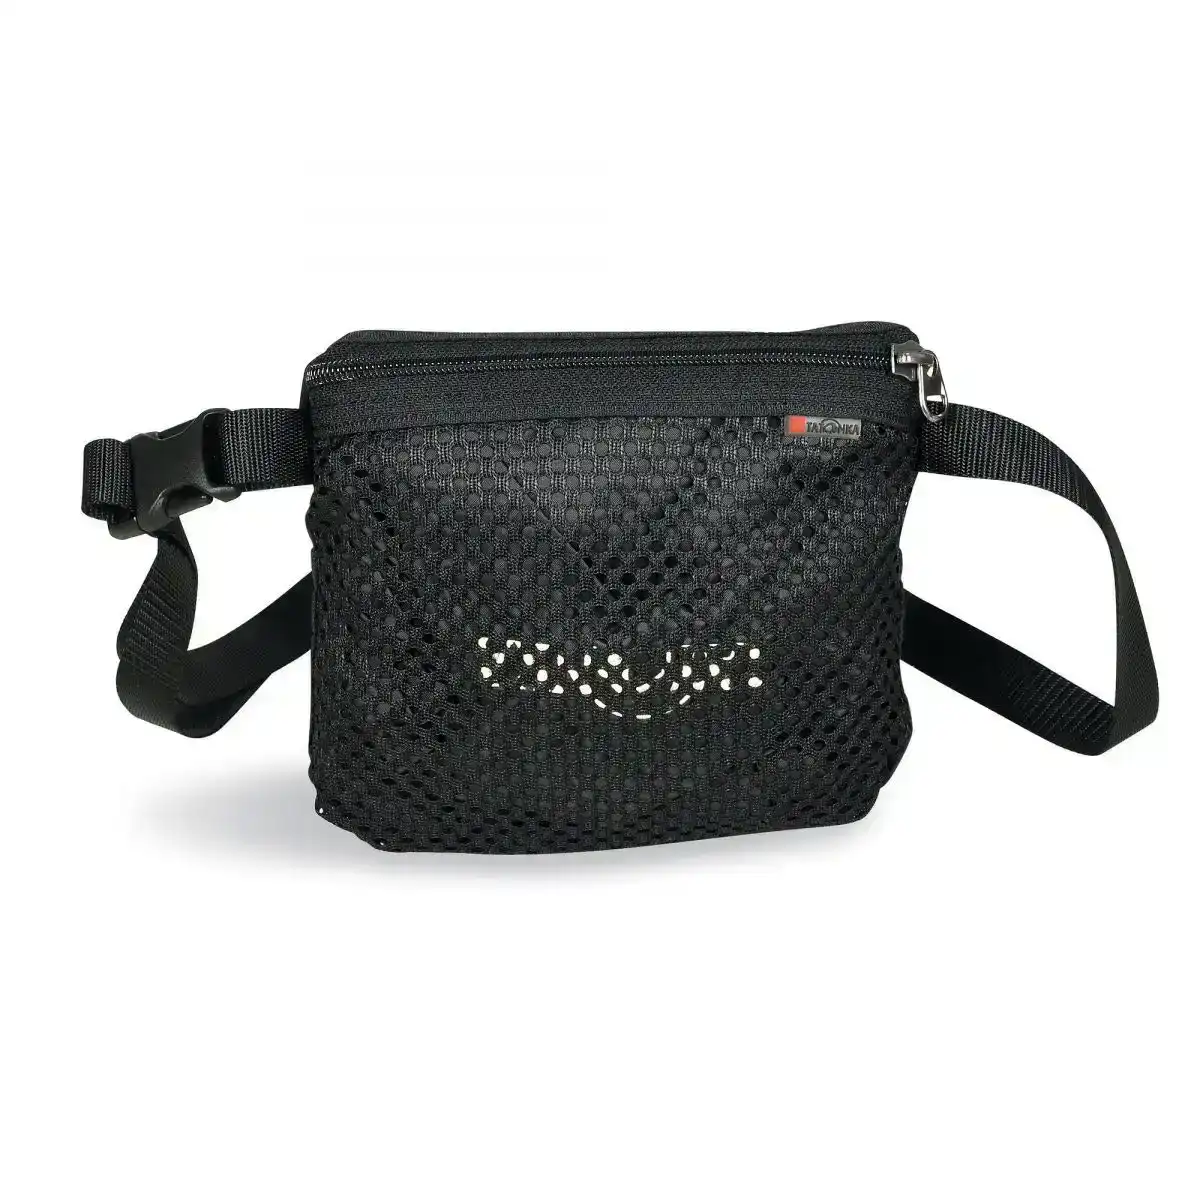 Tatonka Superlight Black 18L Foldable Backpack w/ Belt Bag Lightweight/Foldable